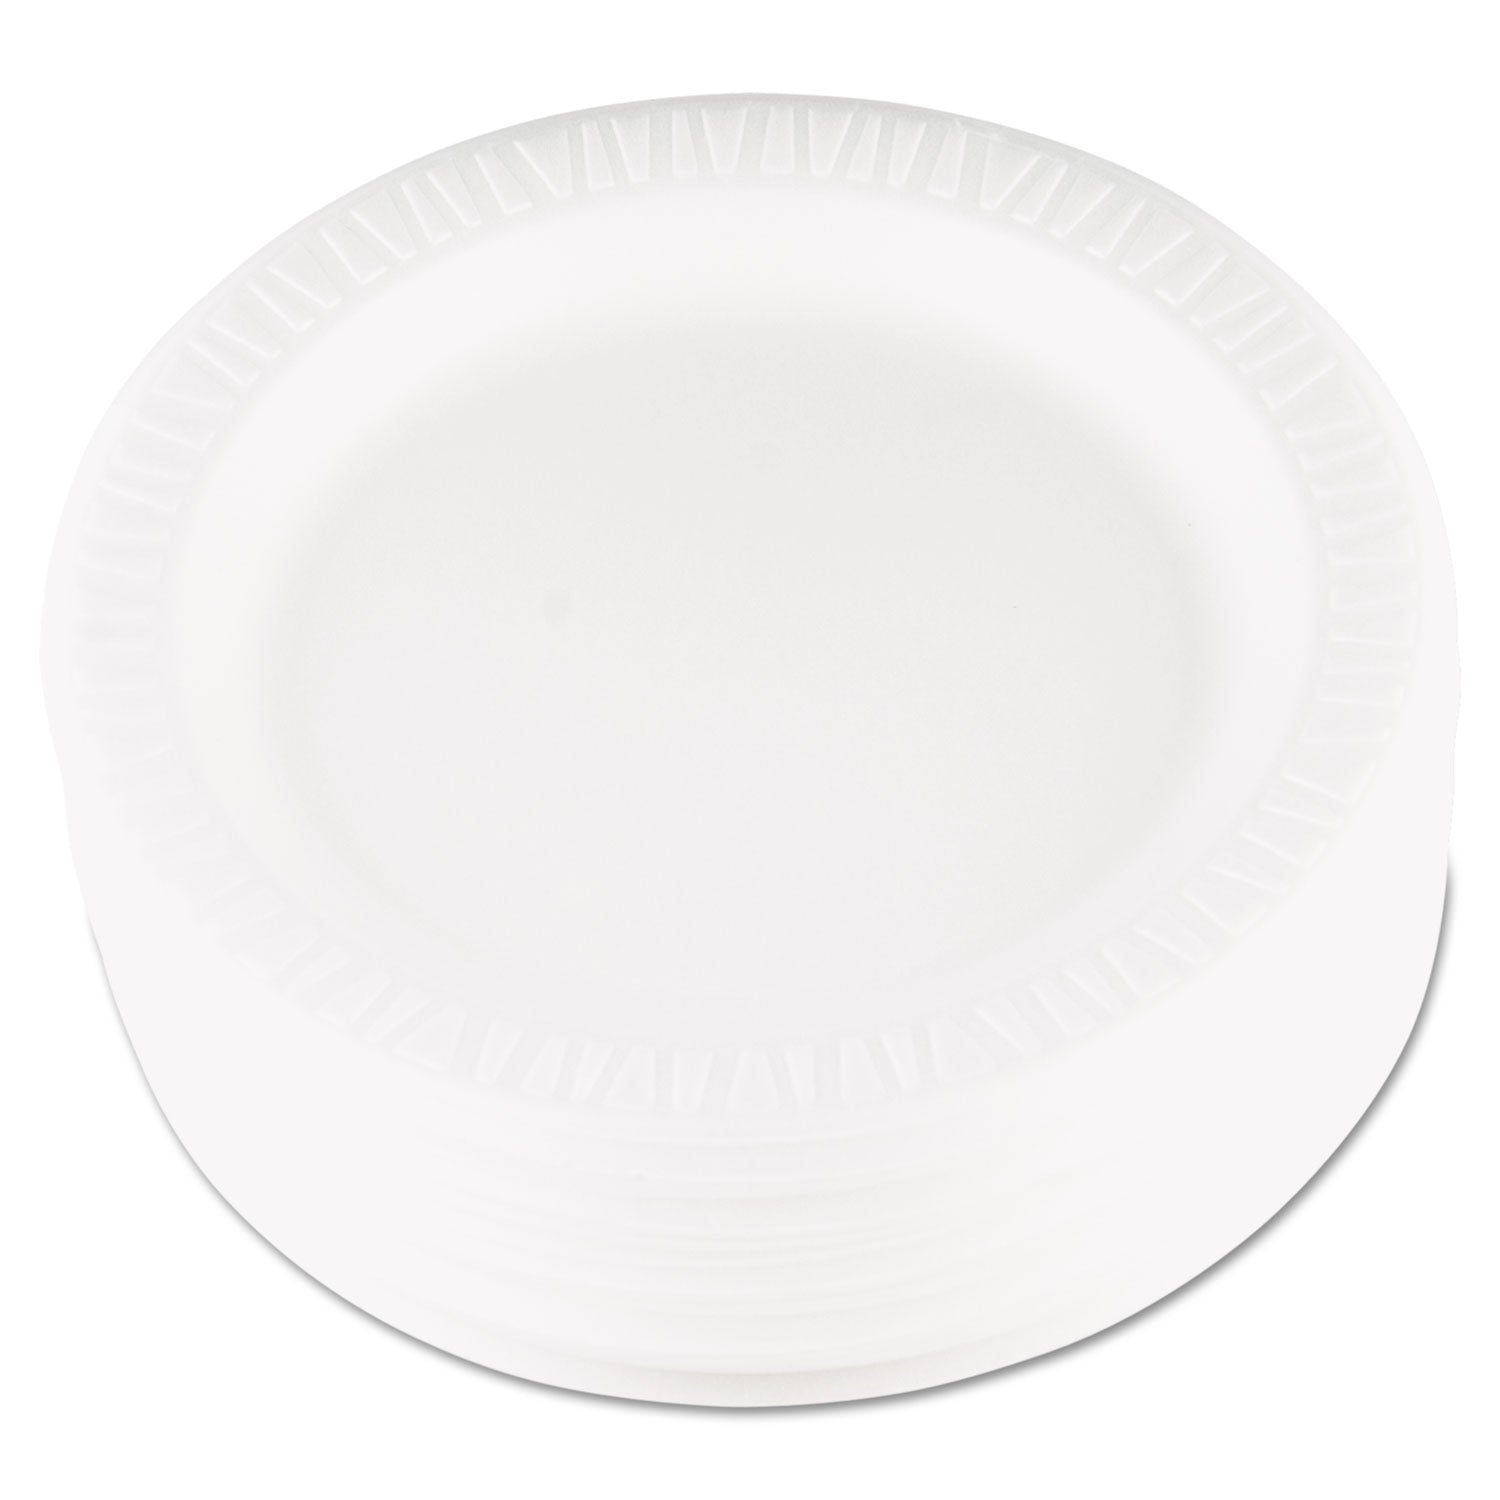 Quiet Classic Laminated Foam Dinnerware, Plate, 9" dia, White, 125/Pack, 4 Packs/Carton - 